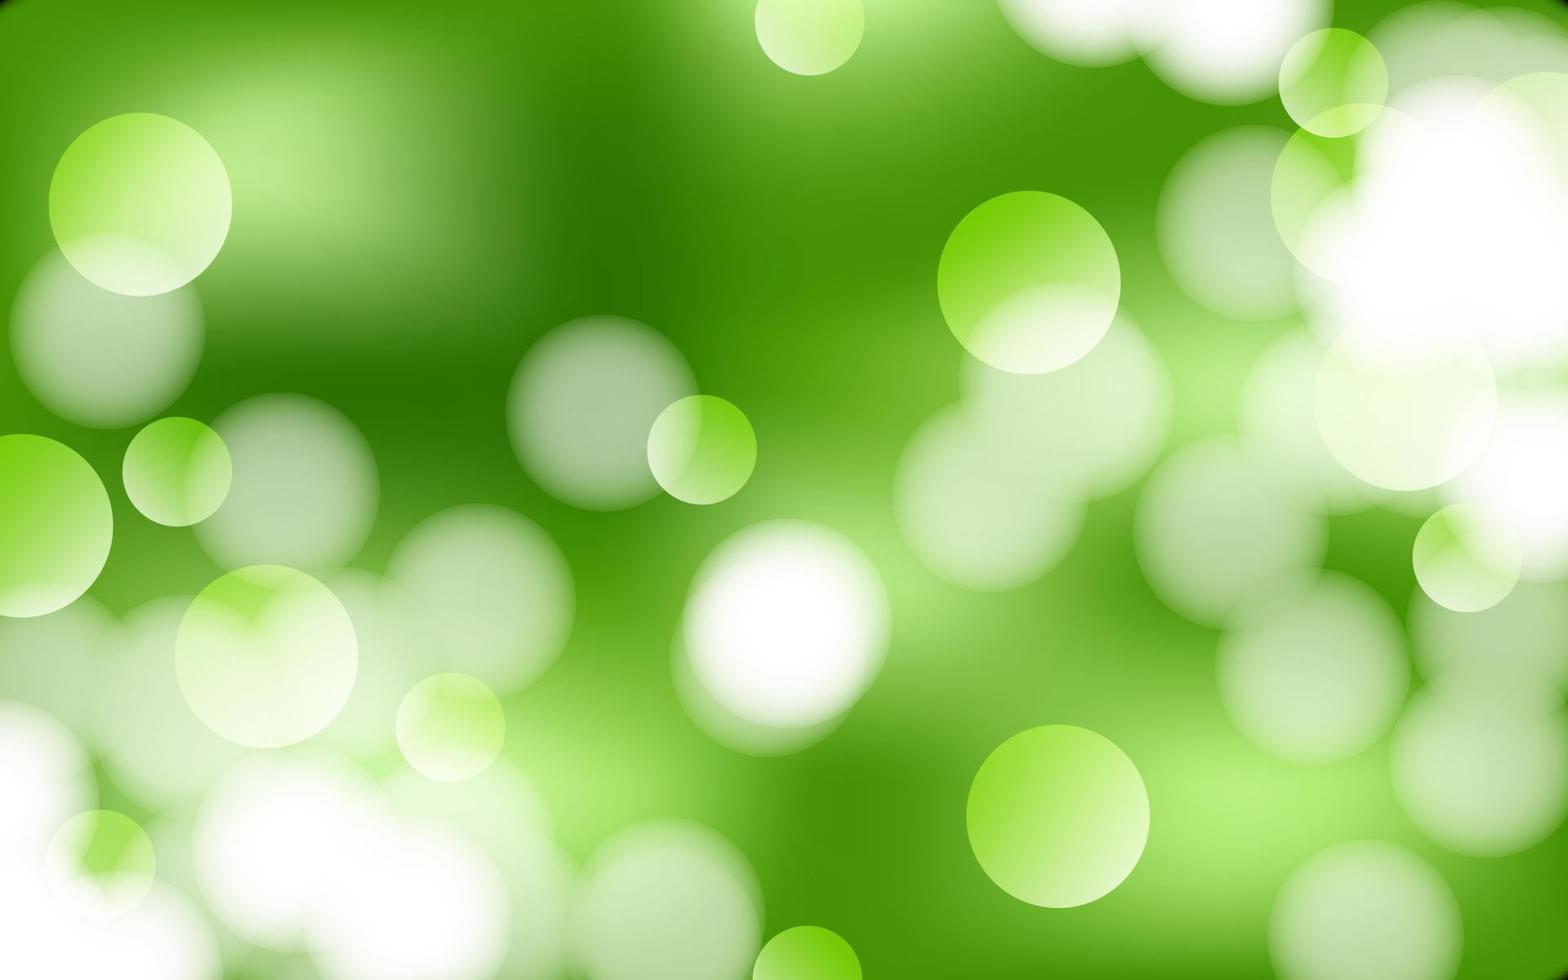 naturaleza verde bokeh luz suave fondo abstracto, vector eps 10 ilustración partículas bokeh, decoración de fondo